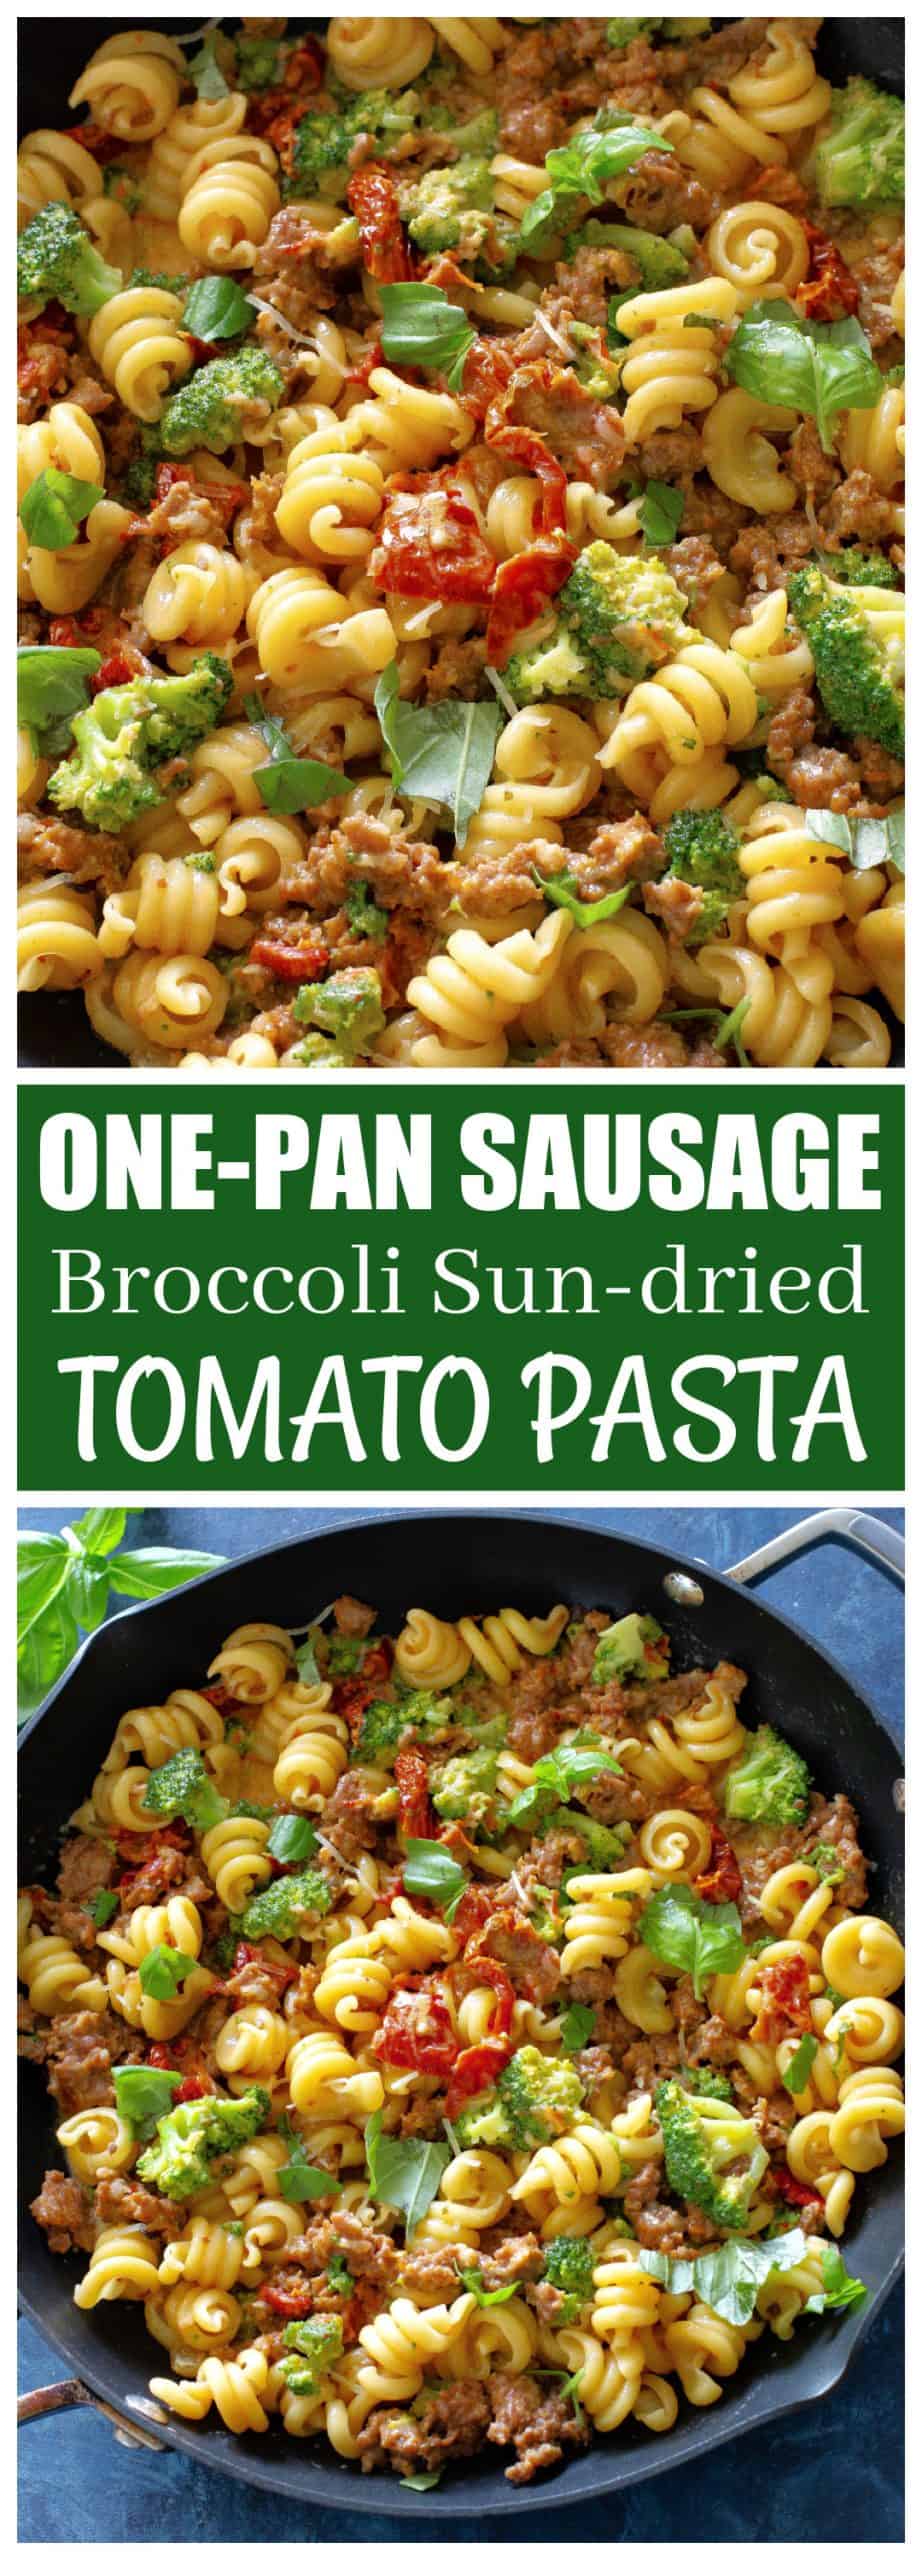 One-Pan Sausage, Broccoli, and Sun-dried Tomato Pasta